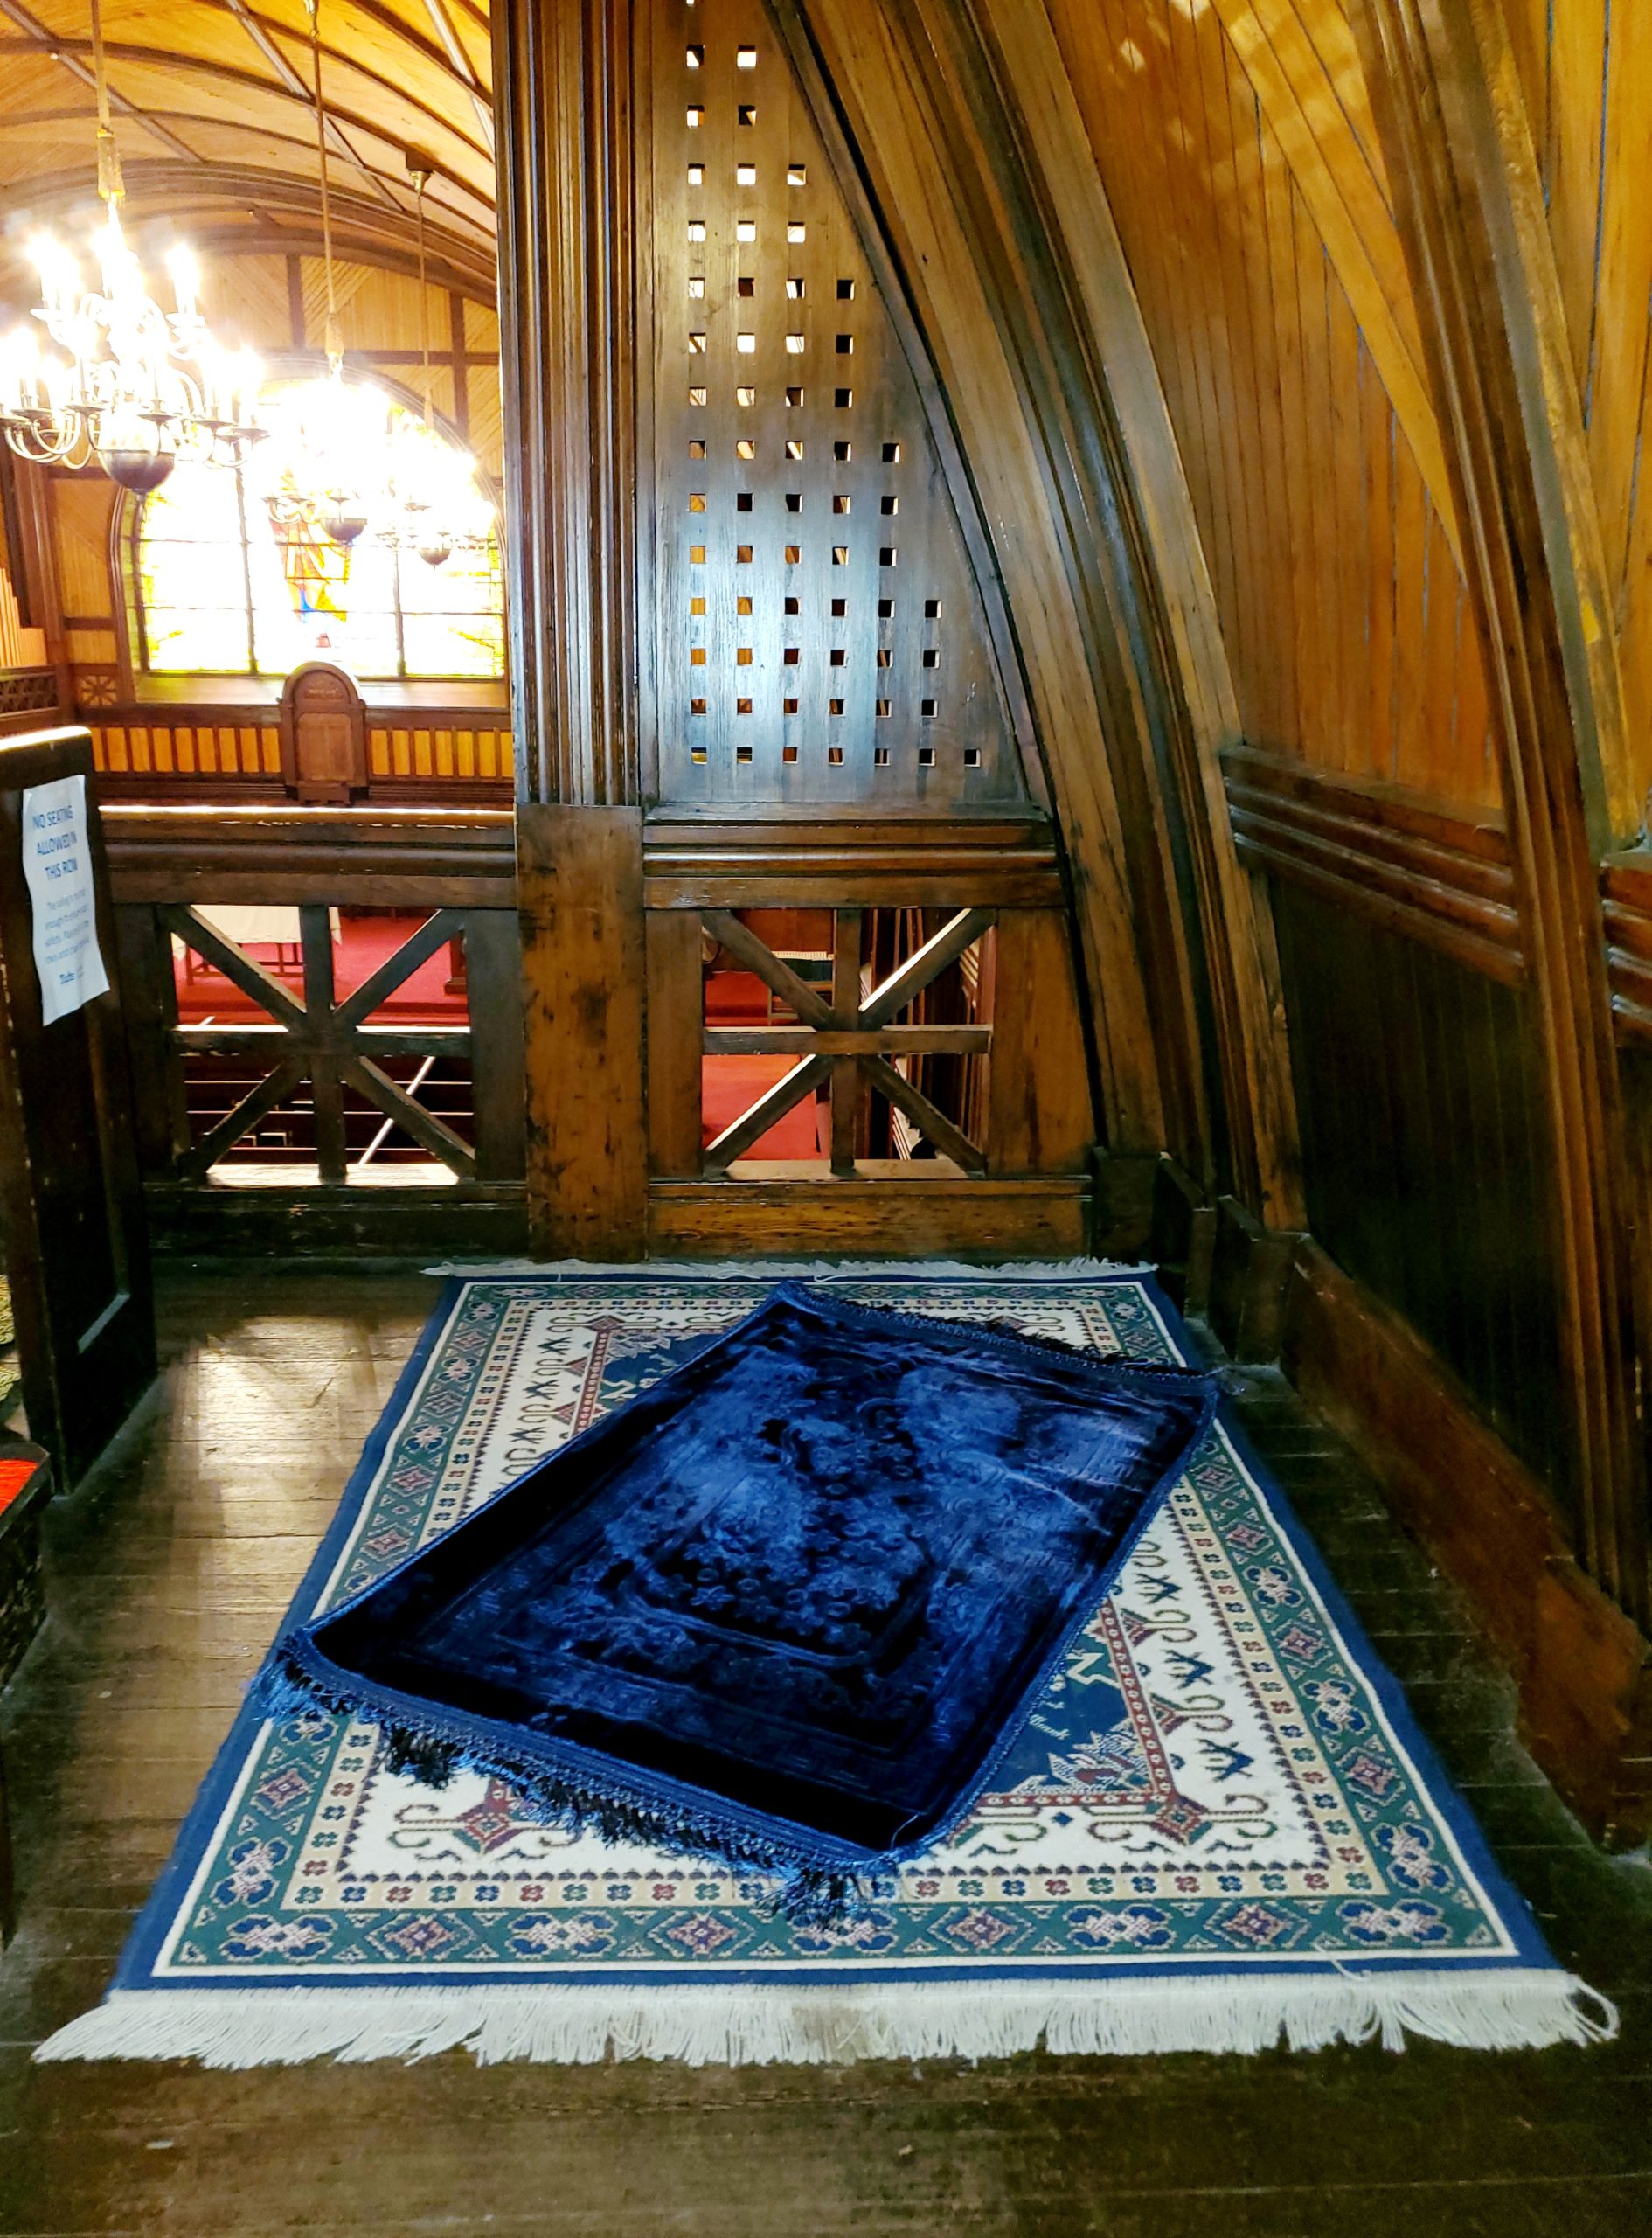 Prayer rug set up